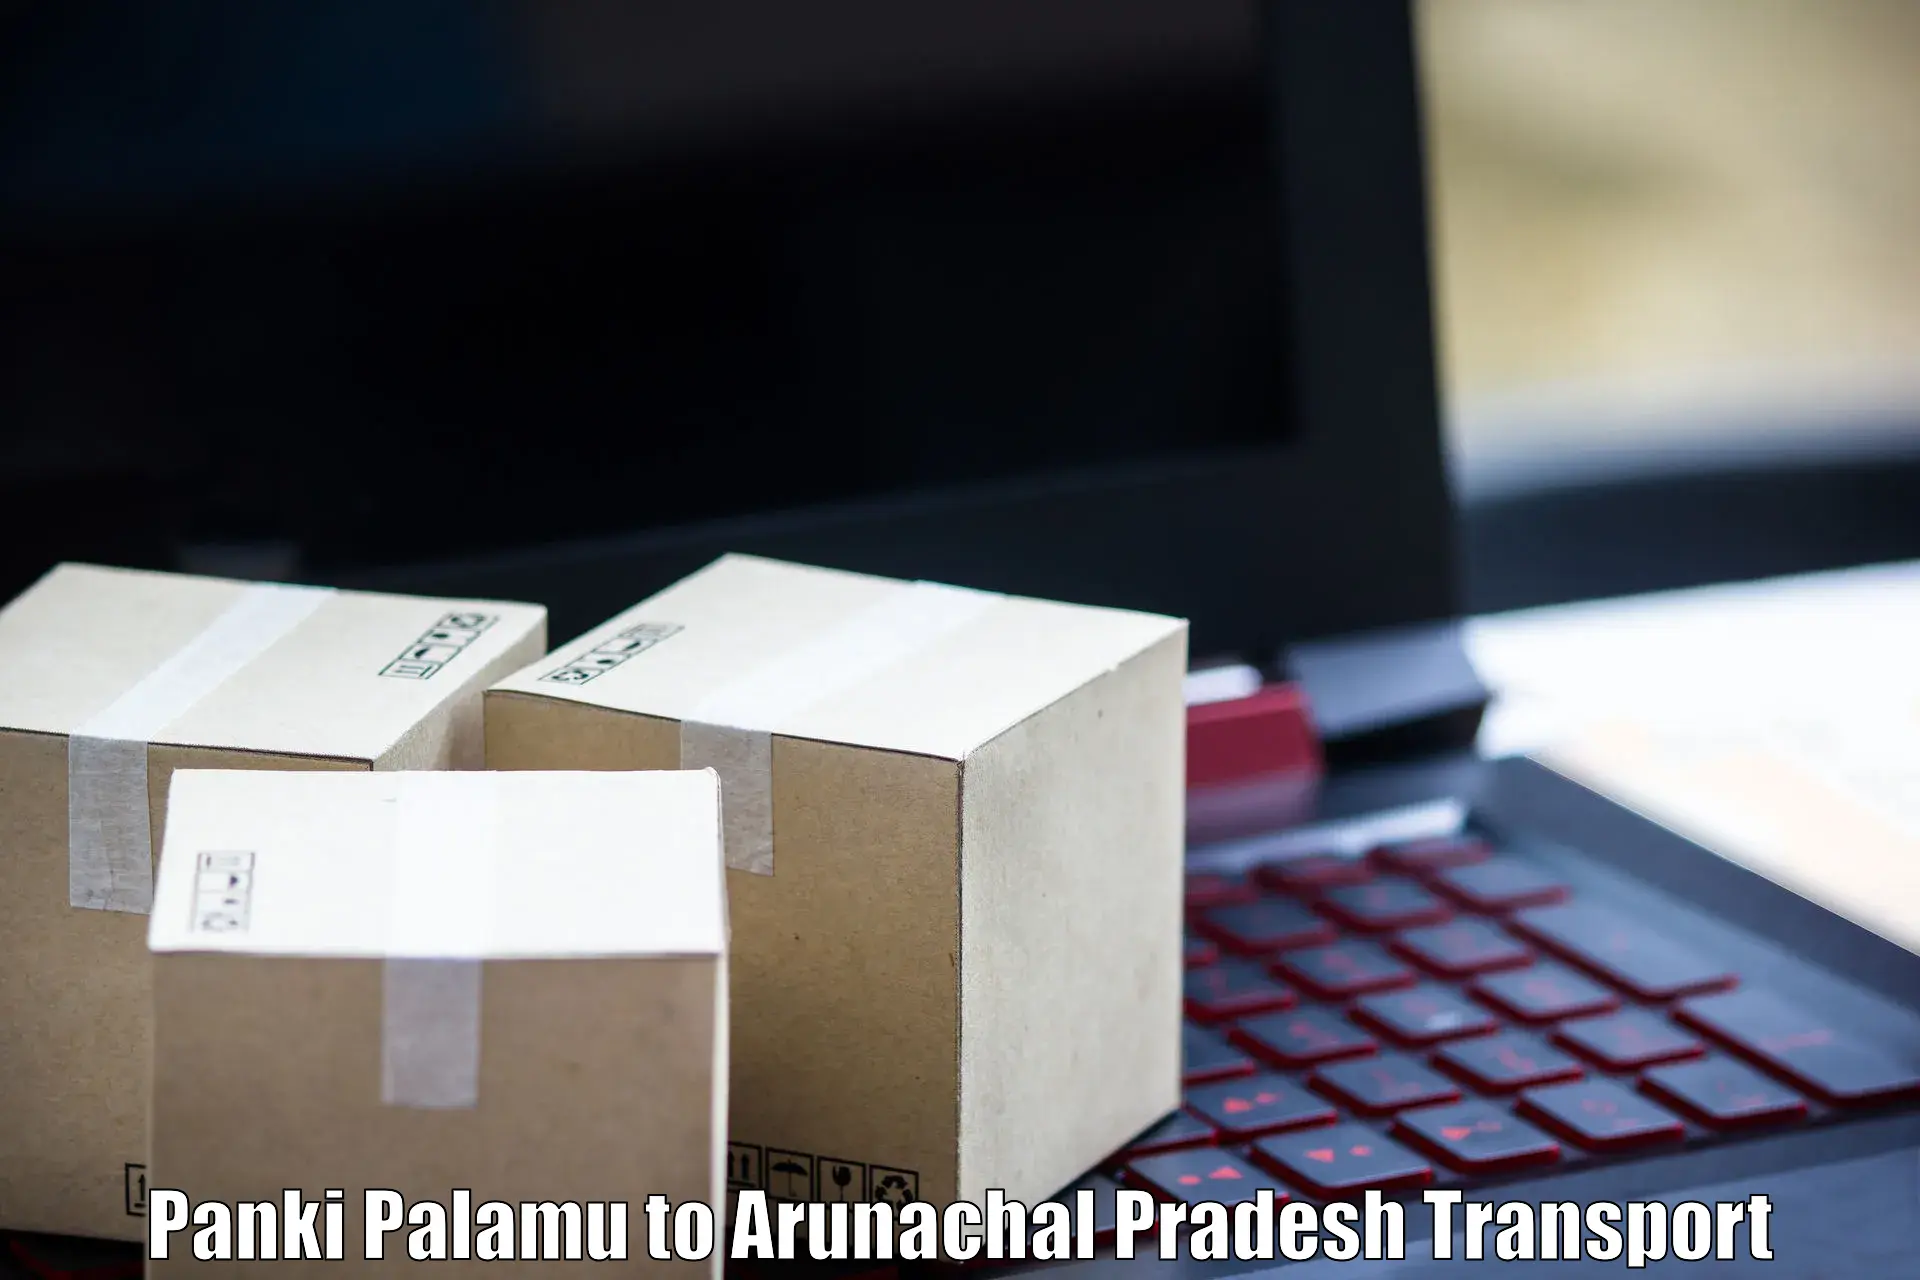 Container transport service Panki Palamu to Boleng